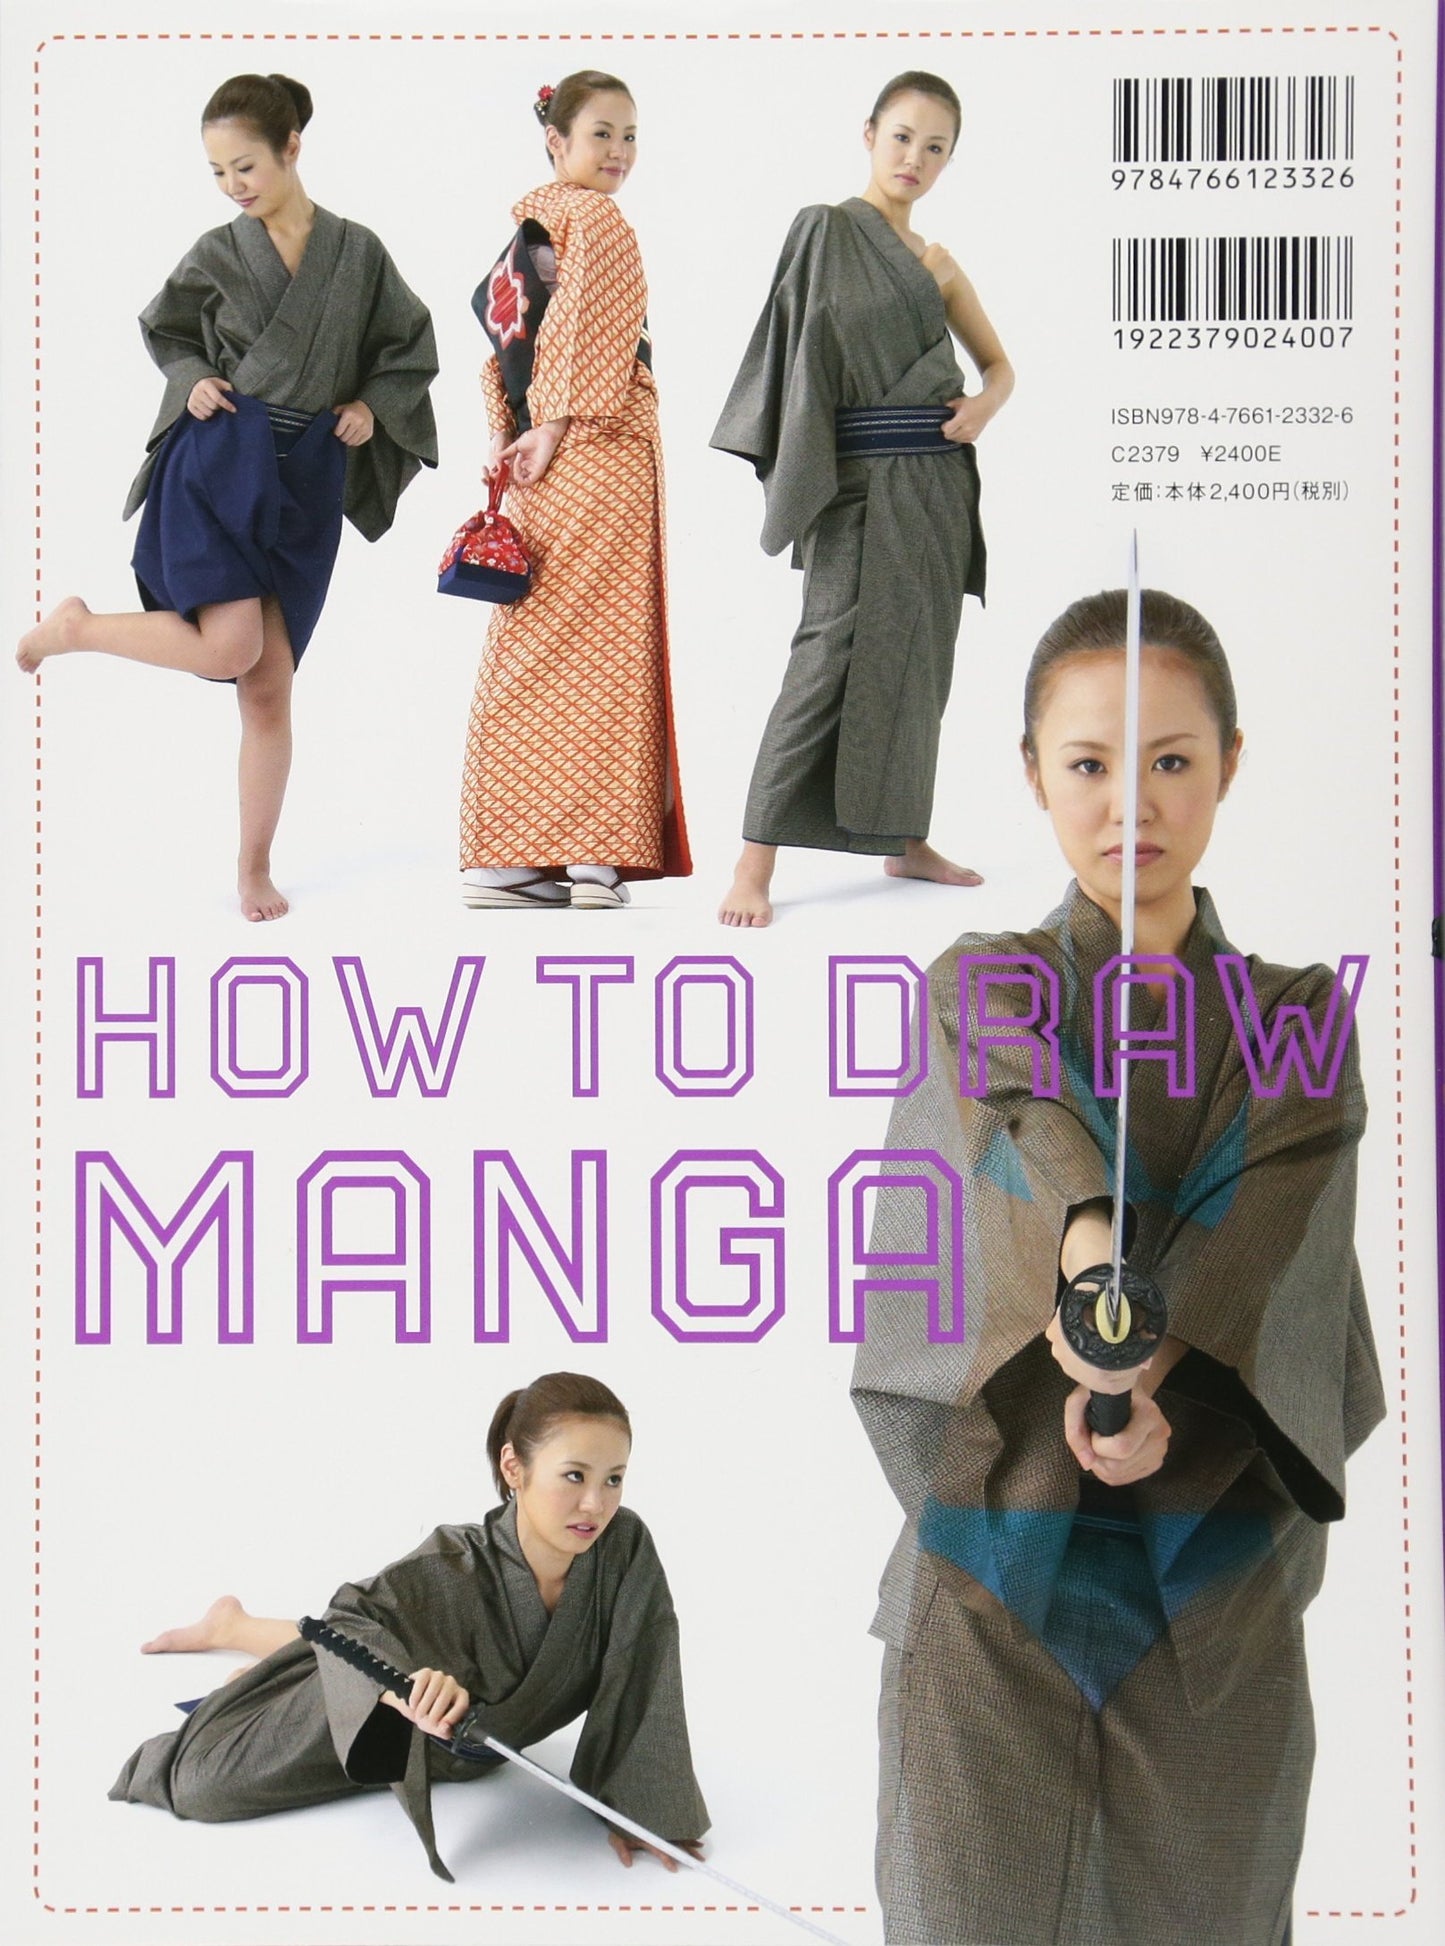 Databook of How to Draw Japanese Kimono Manga Characters Posing [Performance Play Edition]